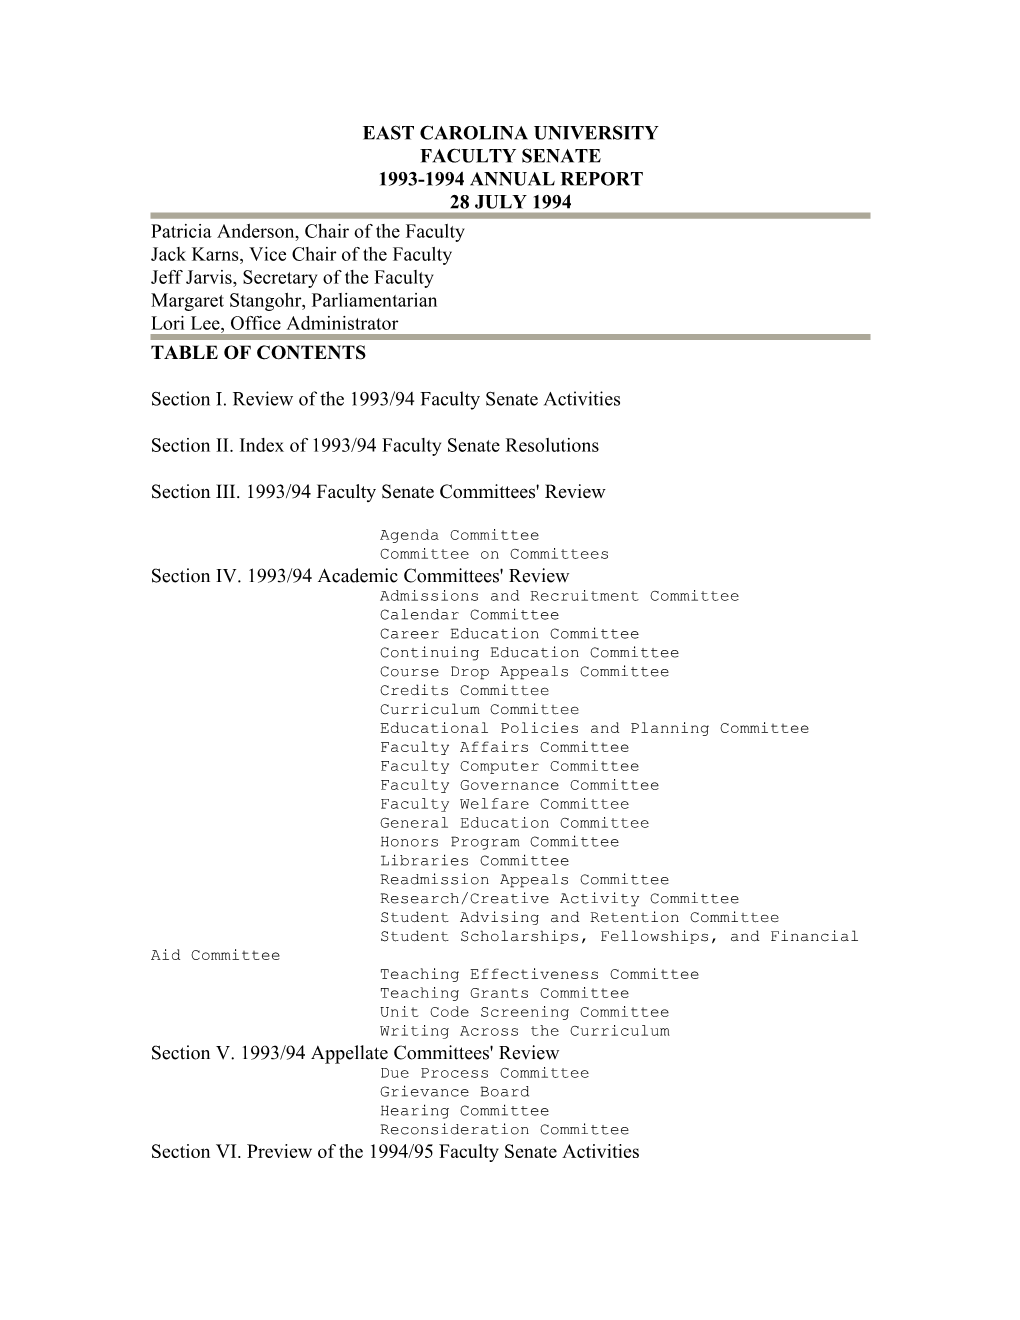 Faculty Senate Annual Report 1993-1994